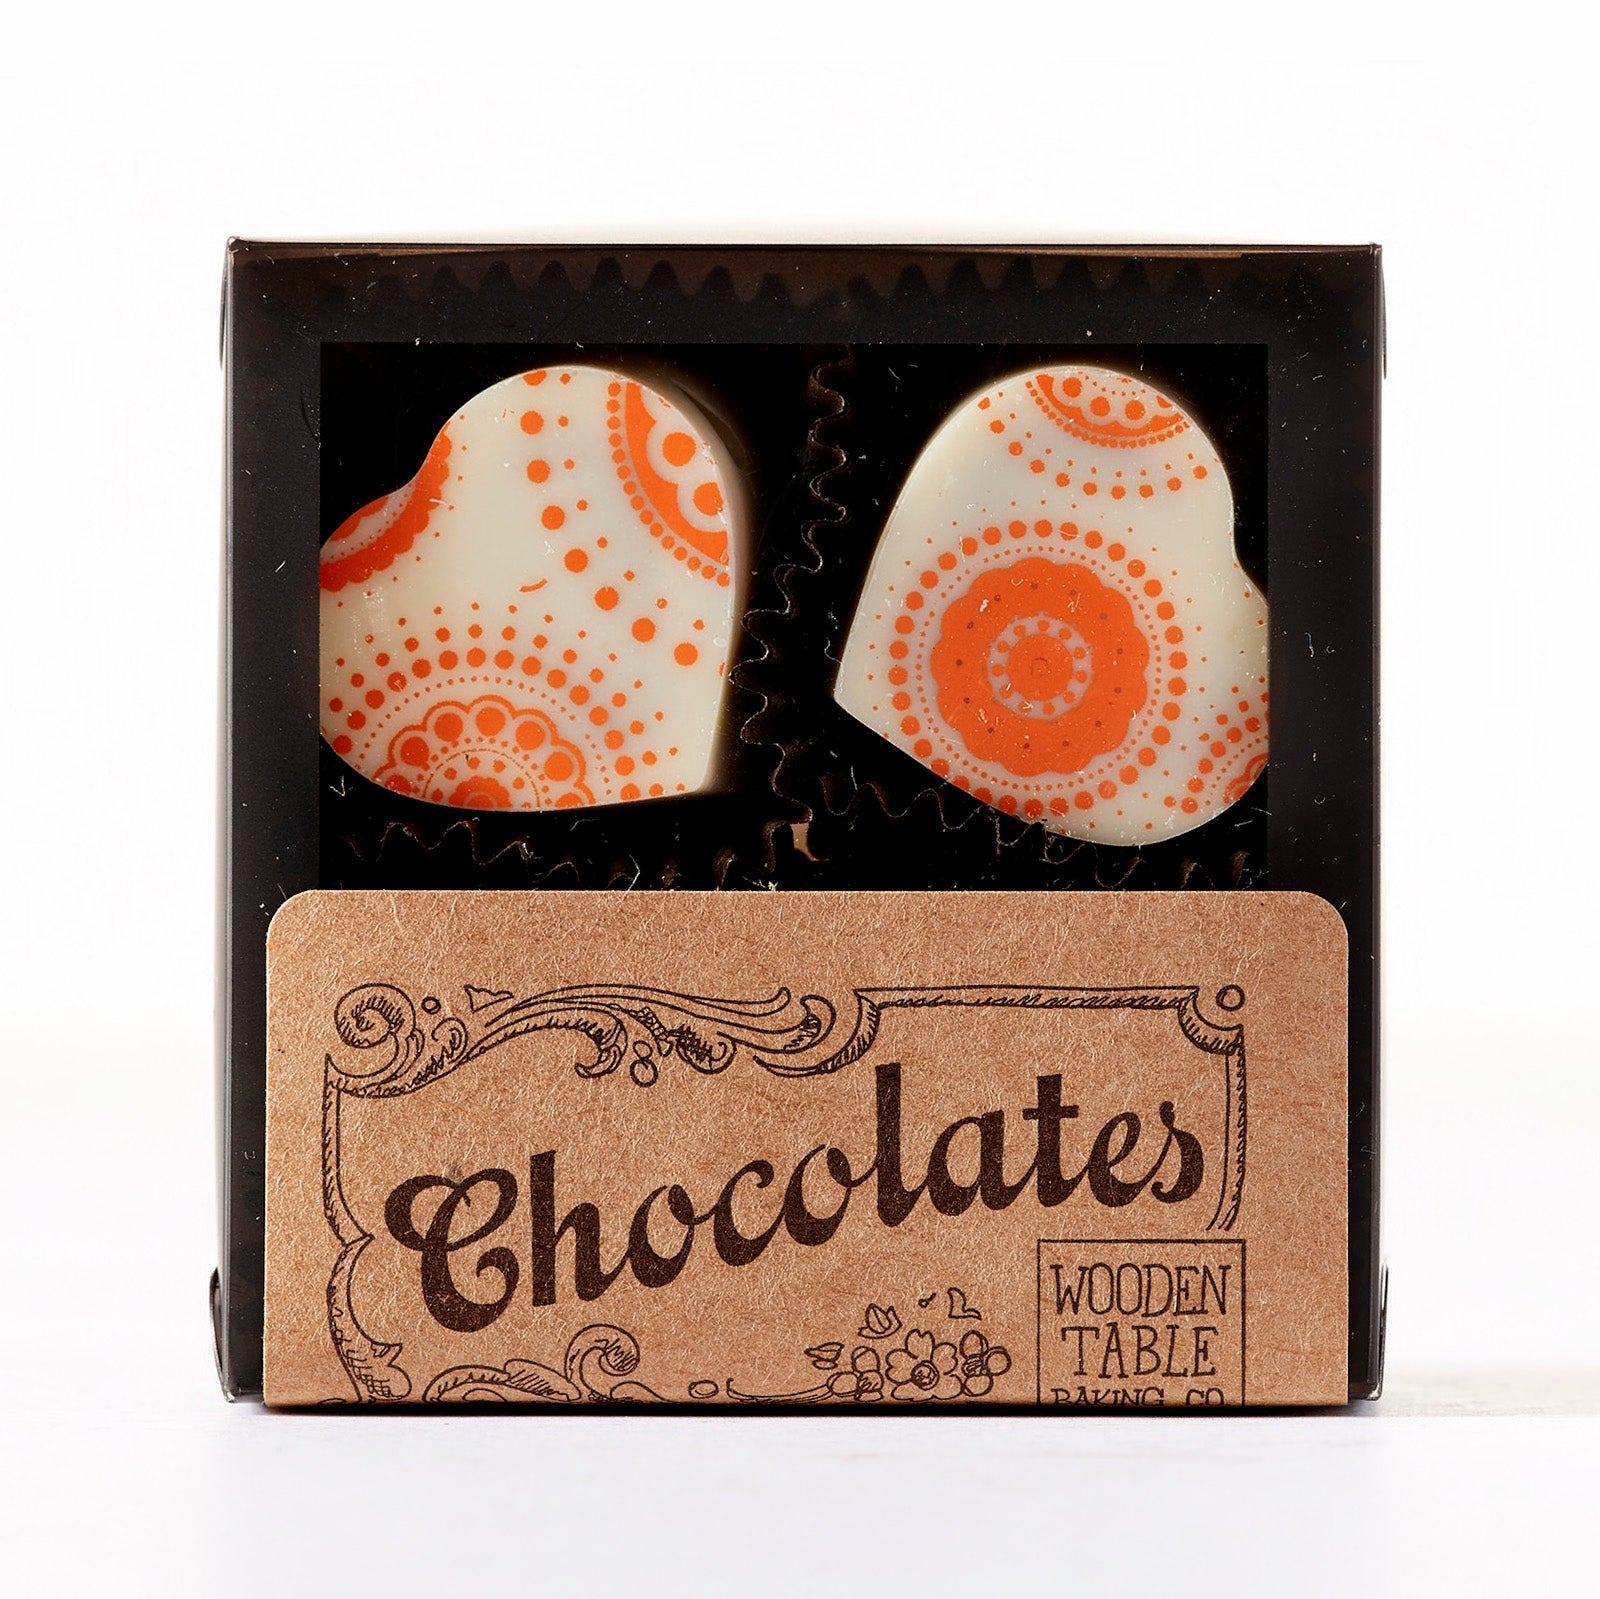 Corazón Bonbons: White Chocolate &amp; Dulce de Leche Wooden Table Baking Co.